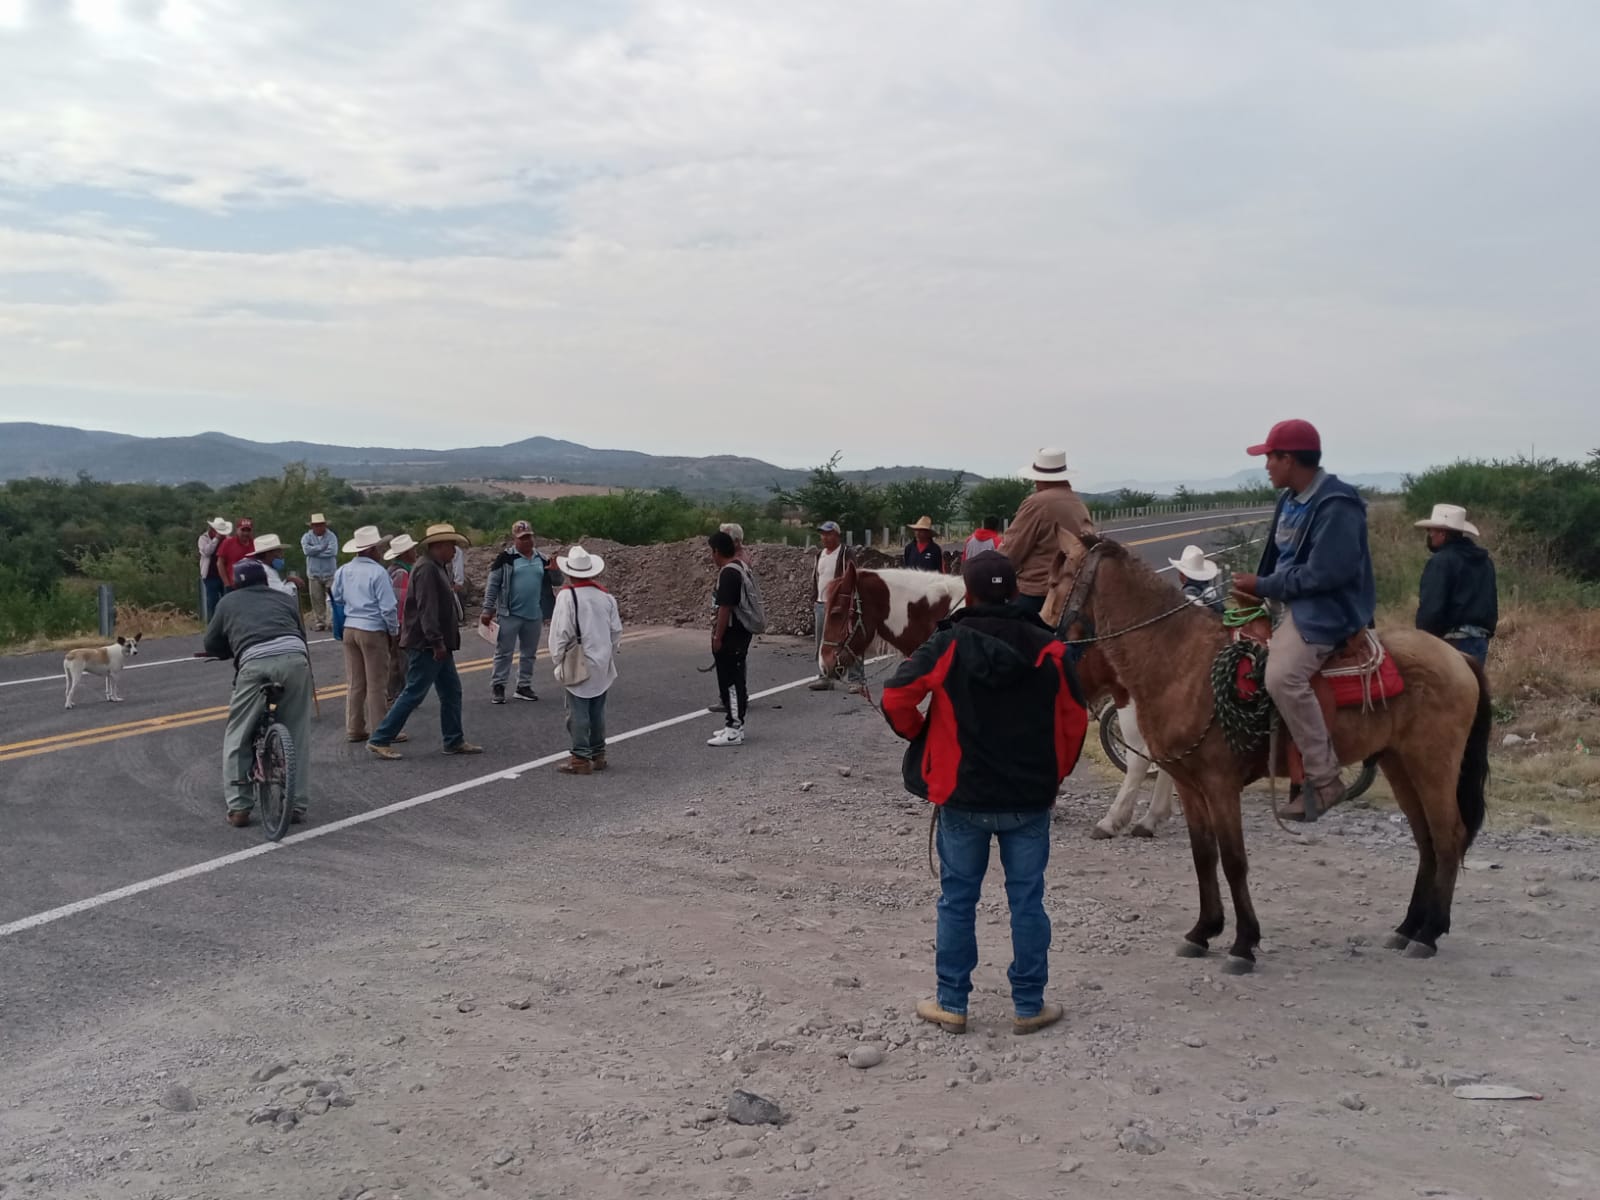 Un grupo de personas caminando junto a un caballo

Descripción generada automáticamente